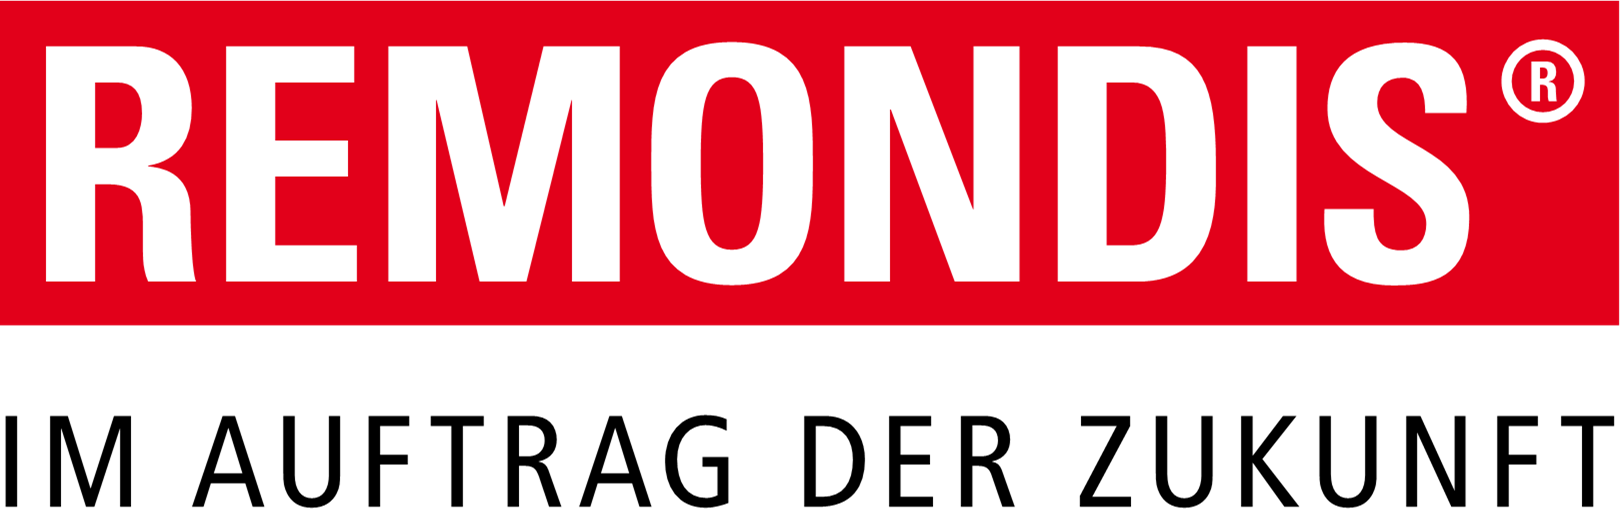 Remondis_Logo